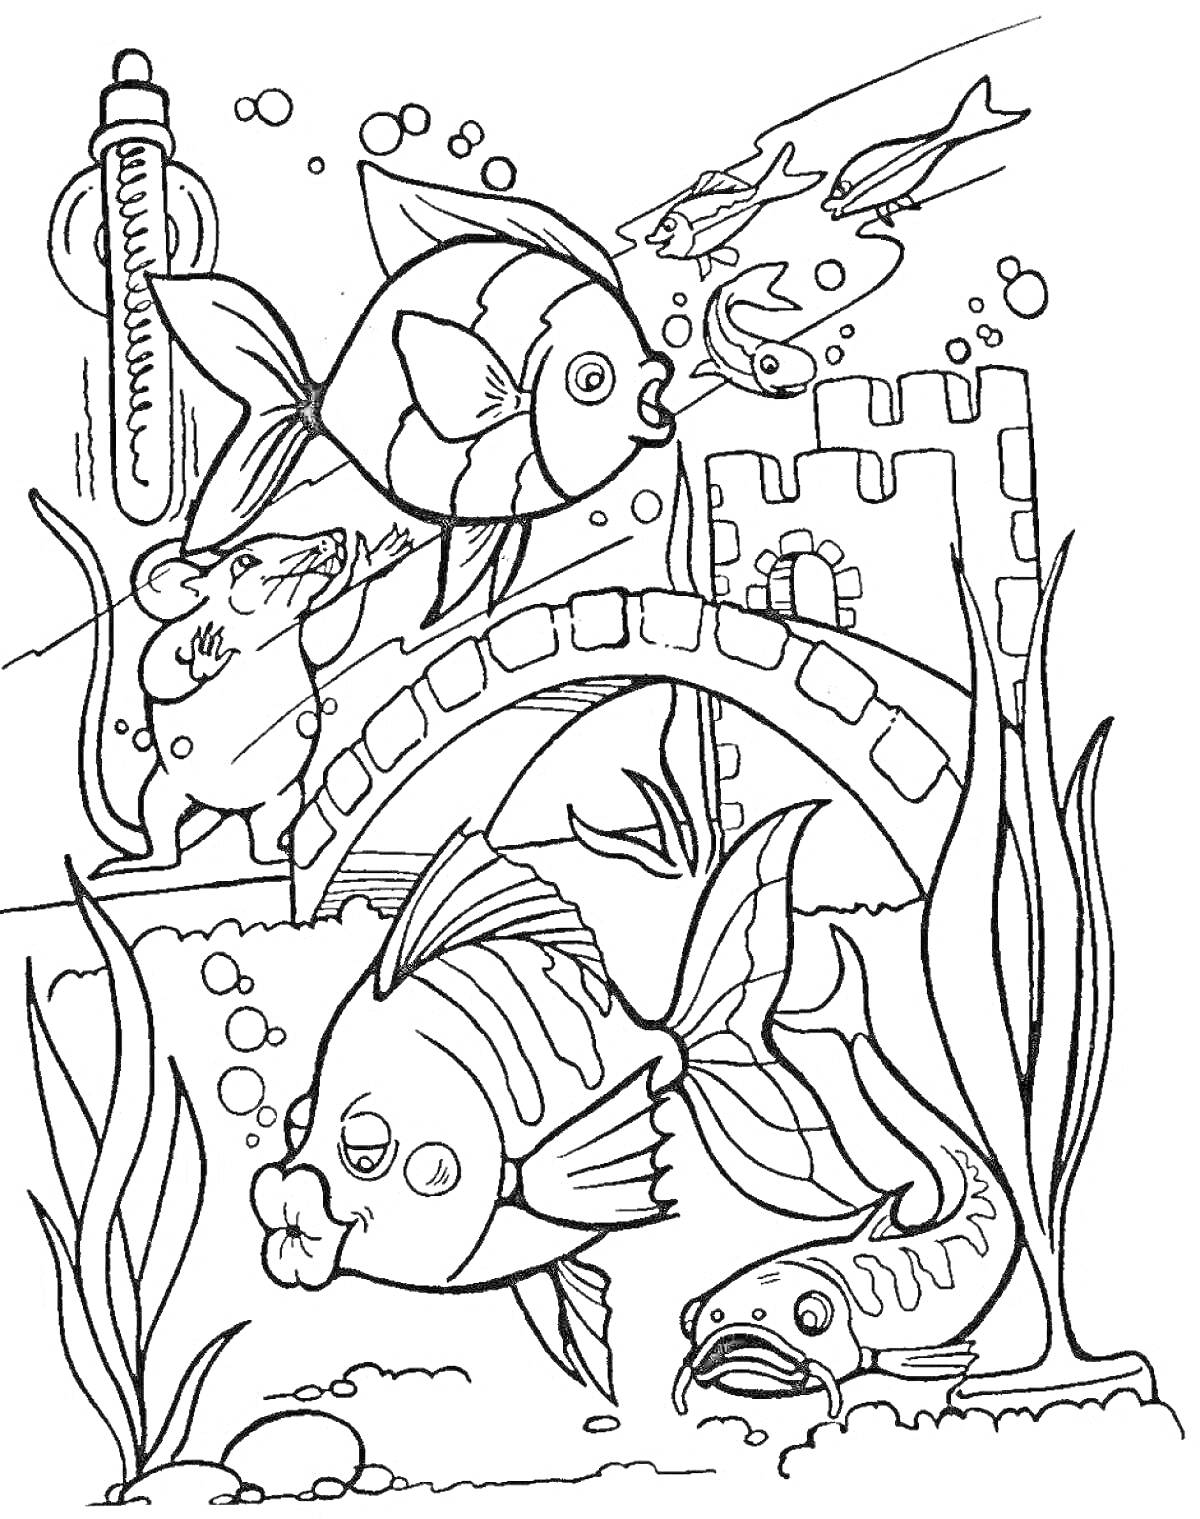 Раскраска Аквариум с рыбами, замком и водорослями